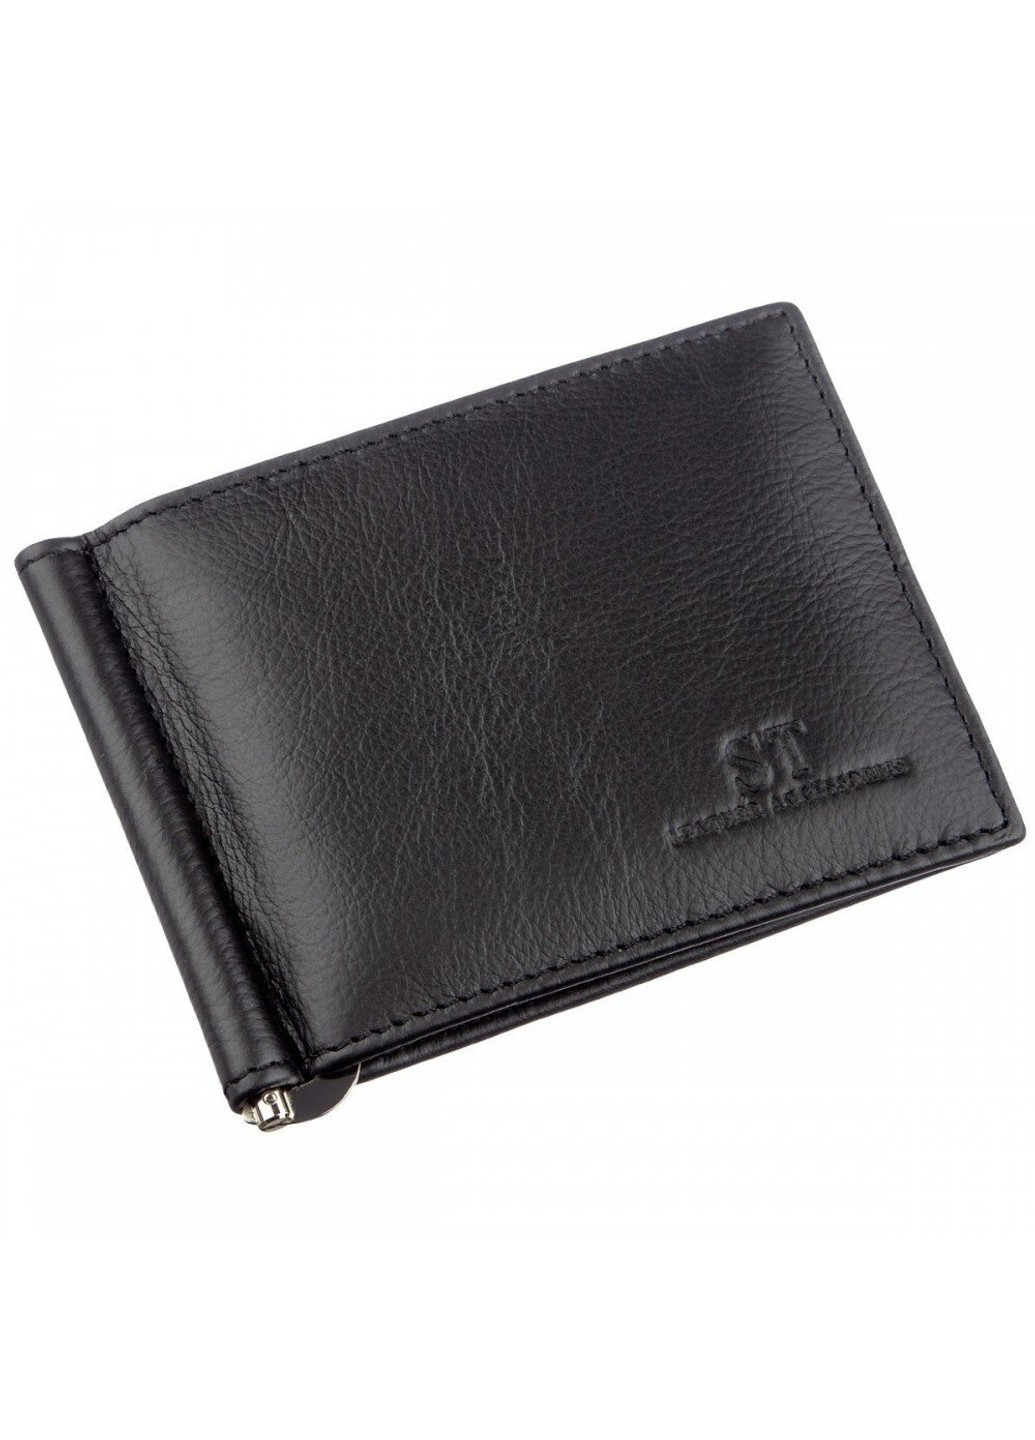 Зажим для купюр из кожи ST Leather 18948 Черный ST Leather Accessories (262524064)